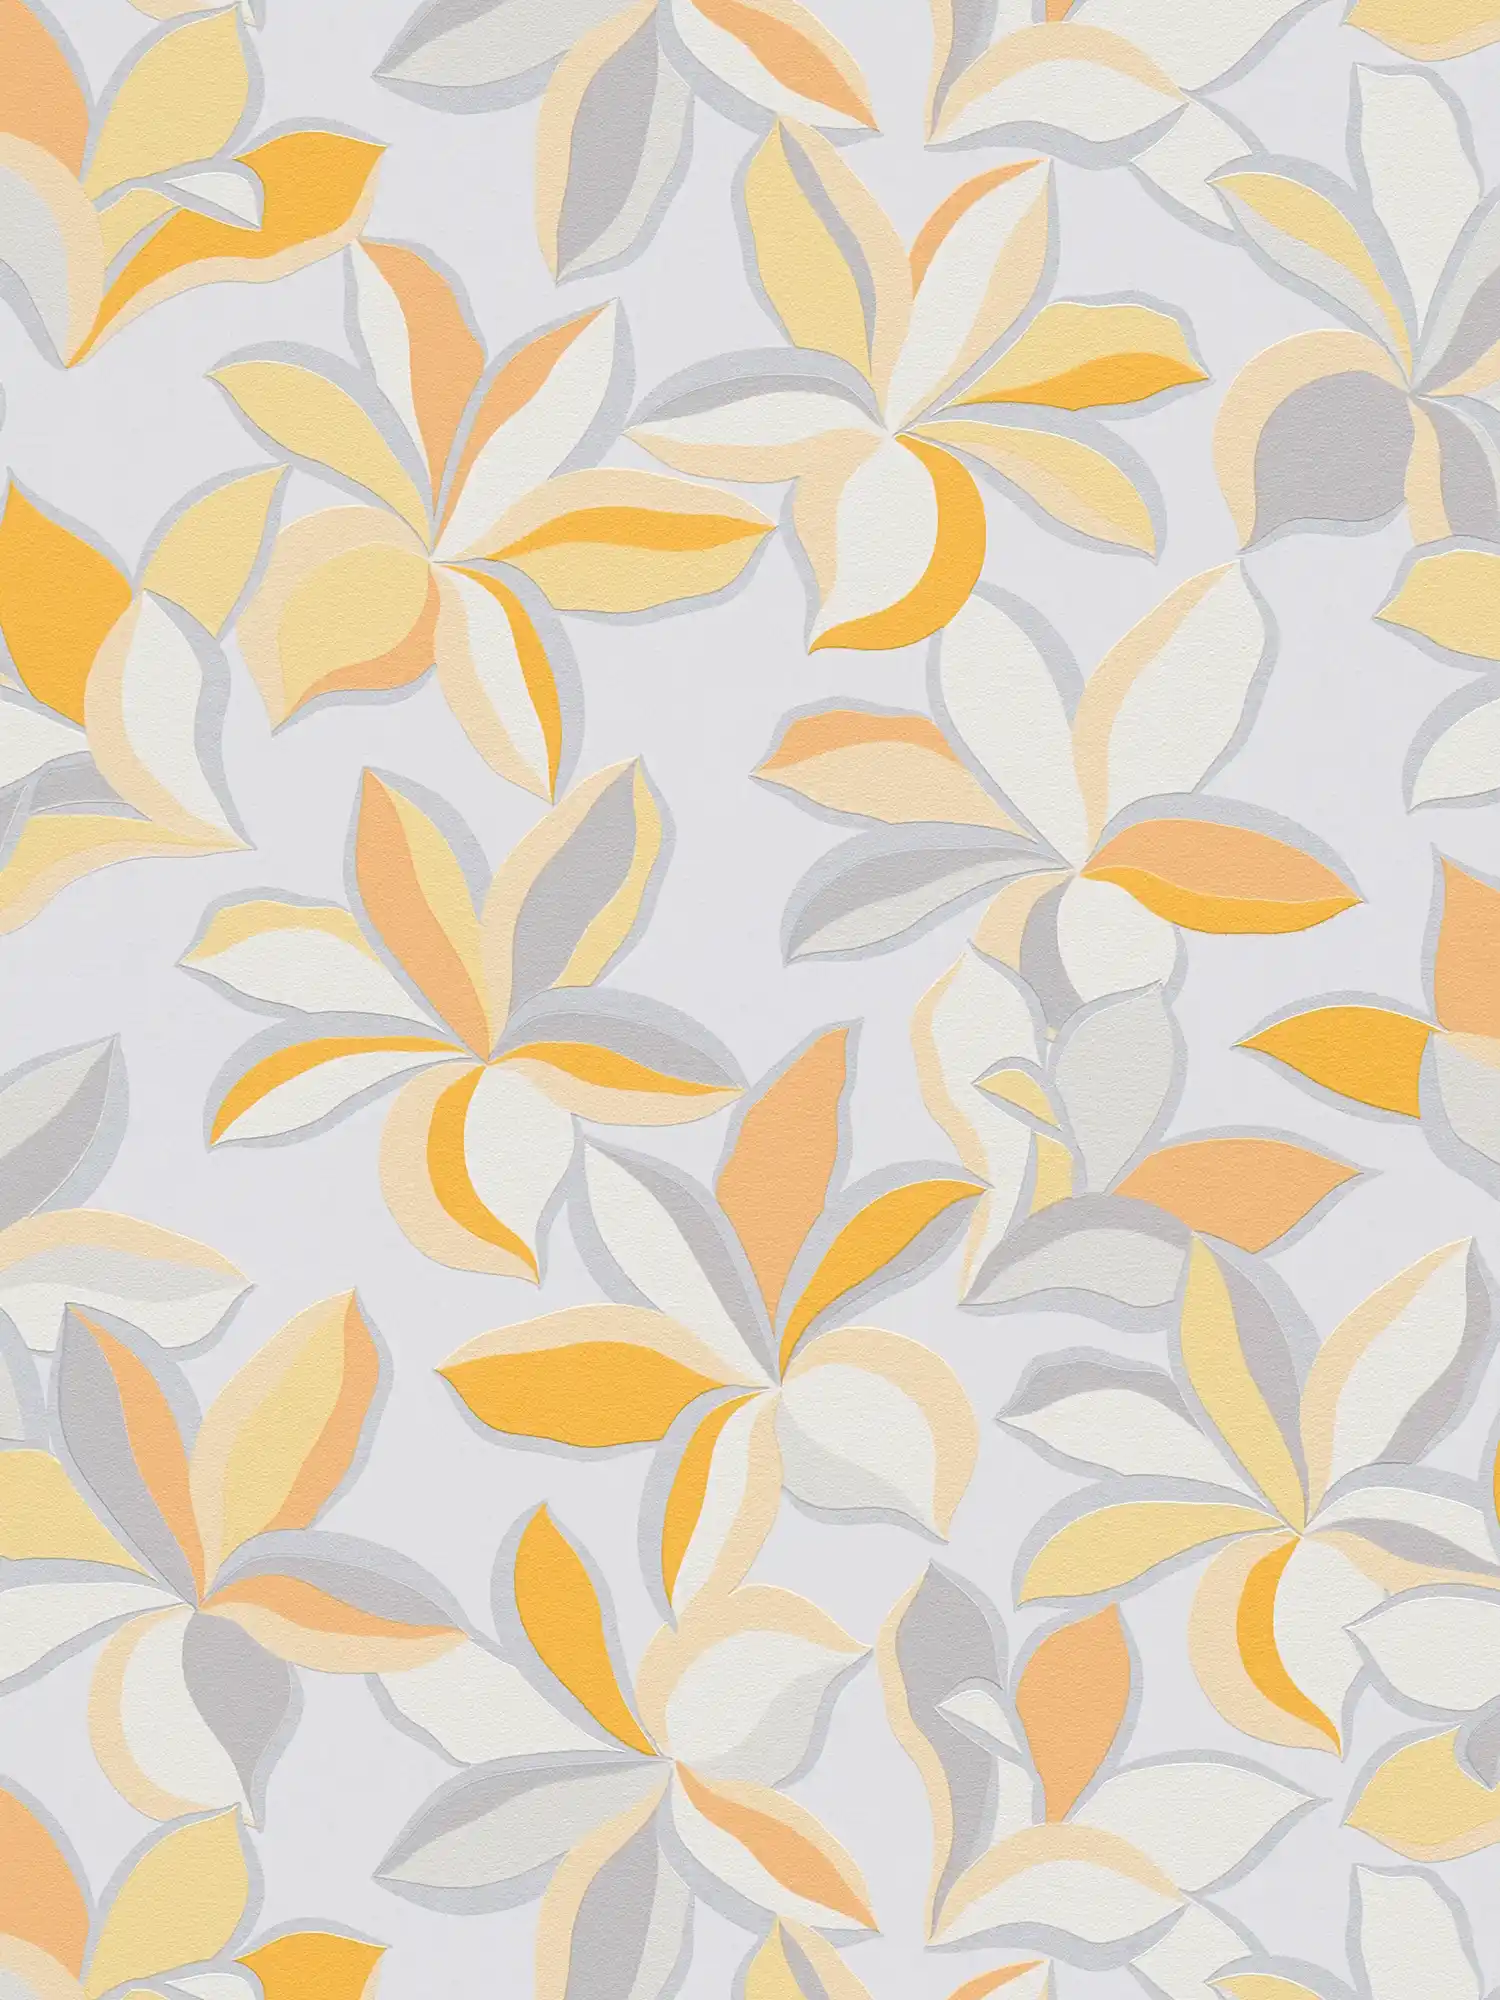         Vliestapete mit Blumenmuster & Metallic-Look – Gelb, Orange, Grau
    